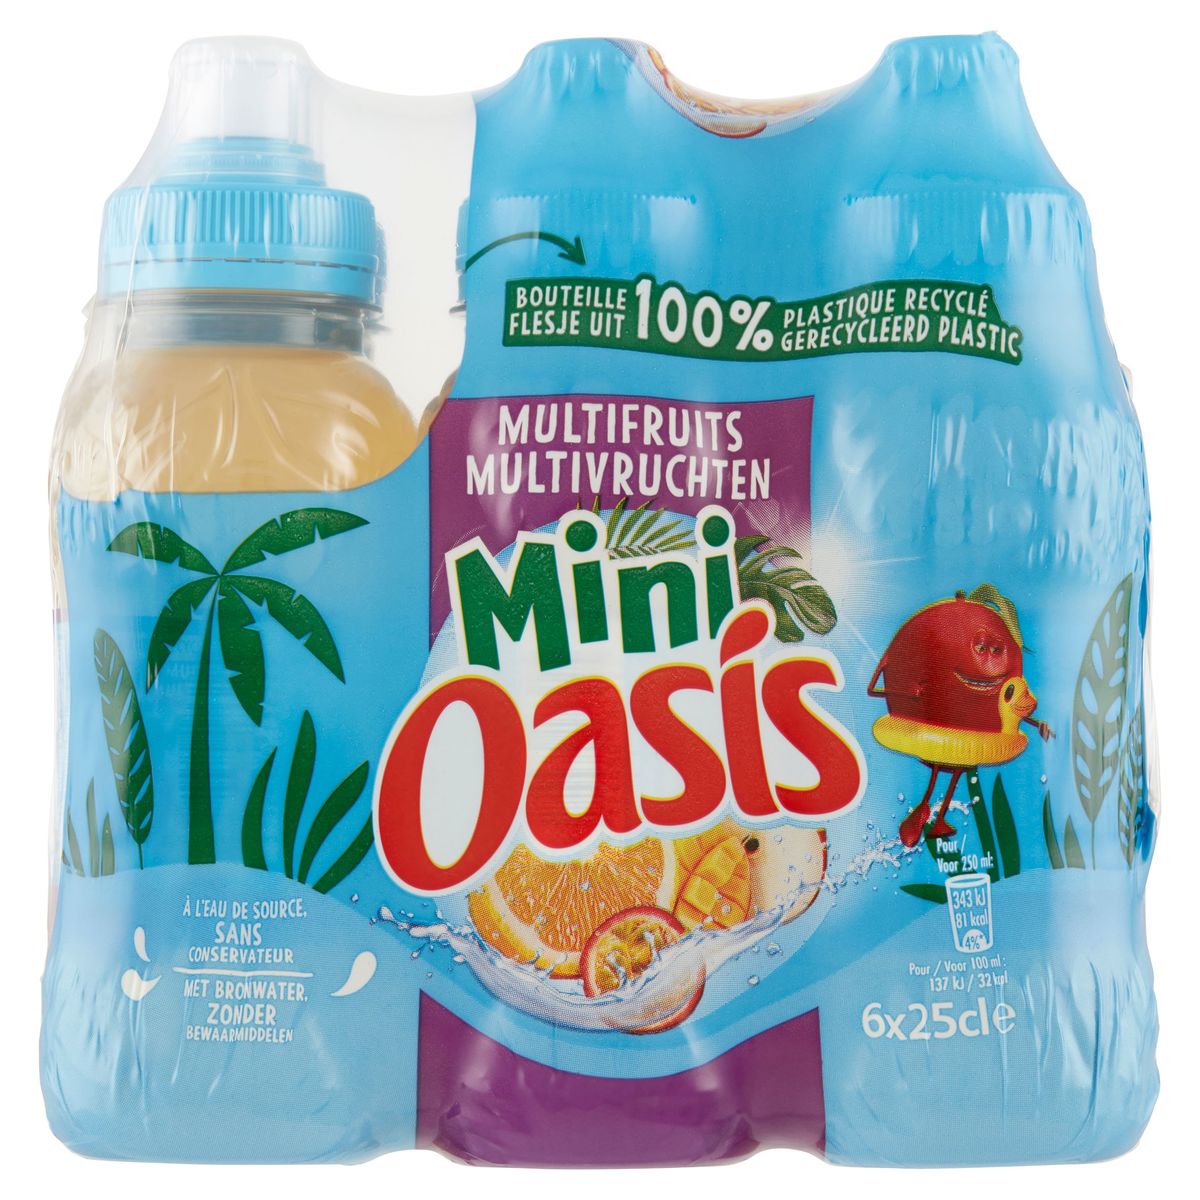 Oasis Mini Multivruchten 6 x 25 cl